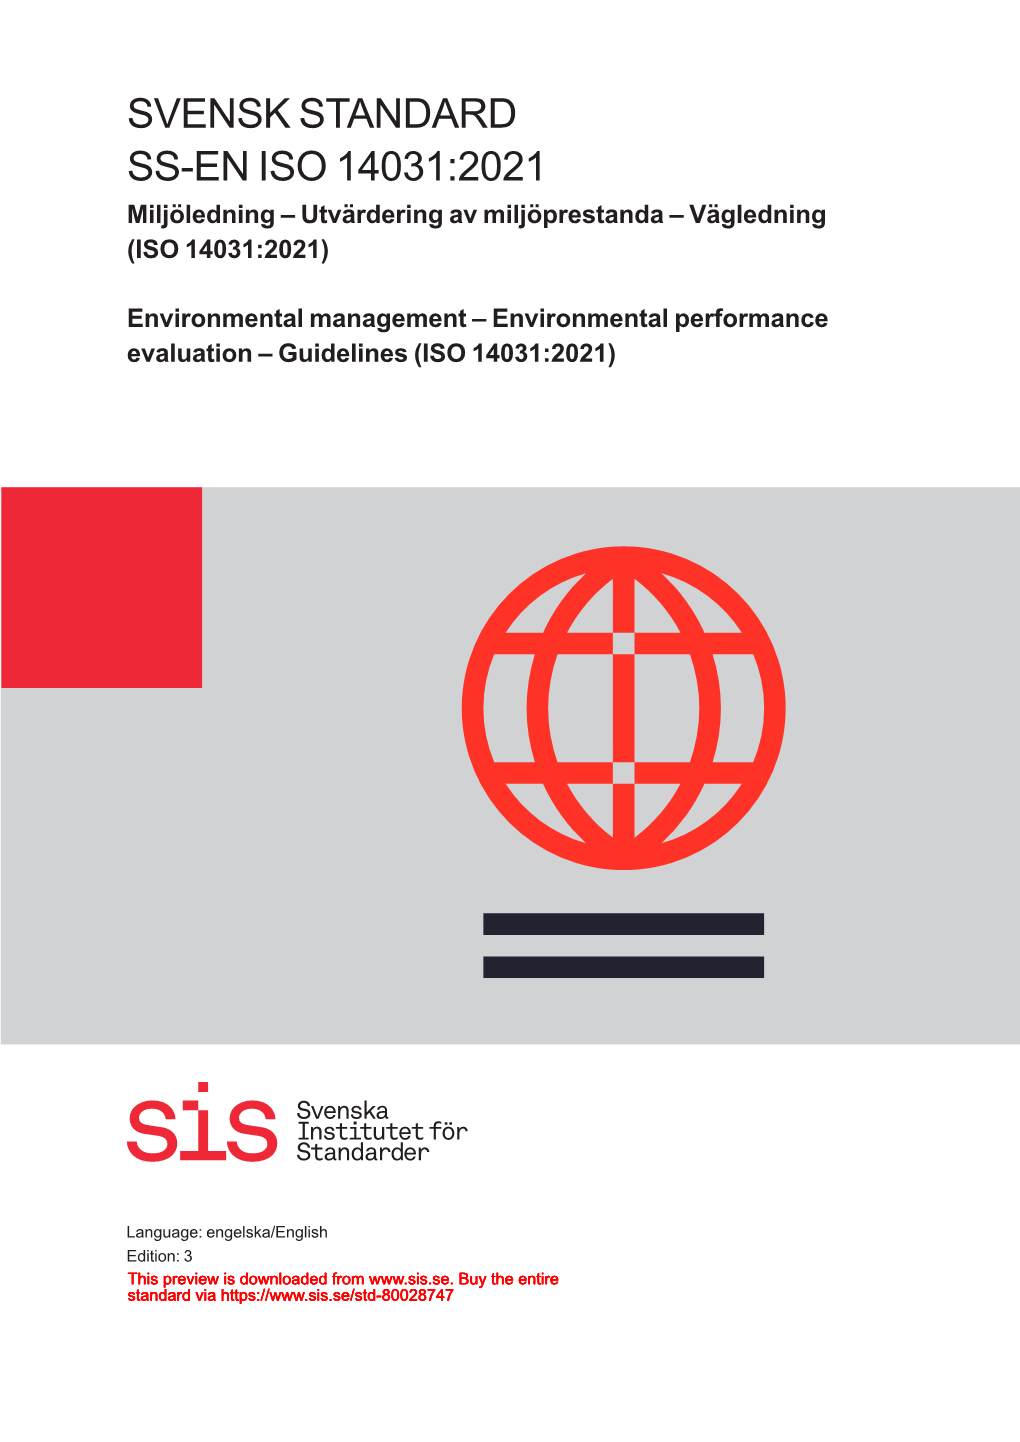 (ISO 14031:2021) Environmental Management